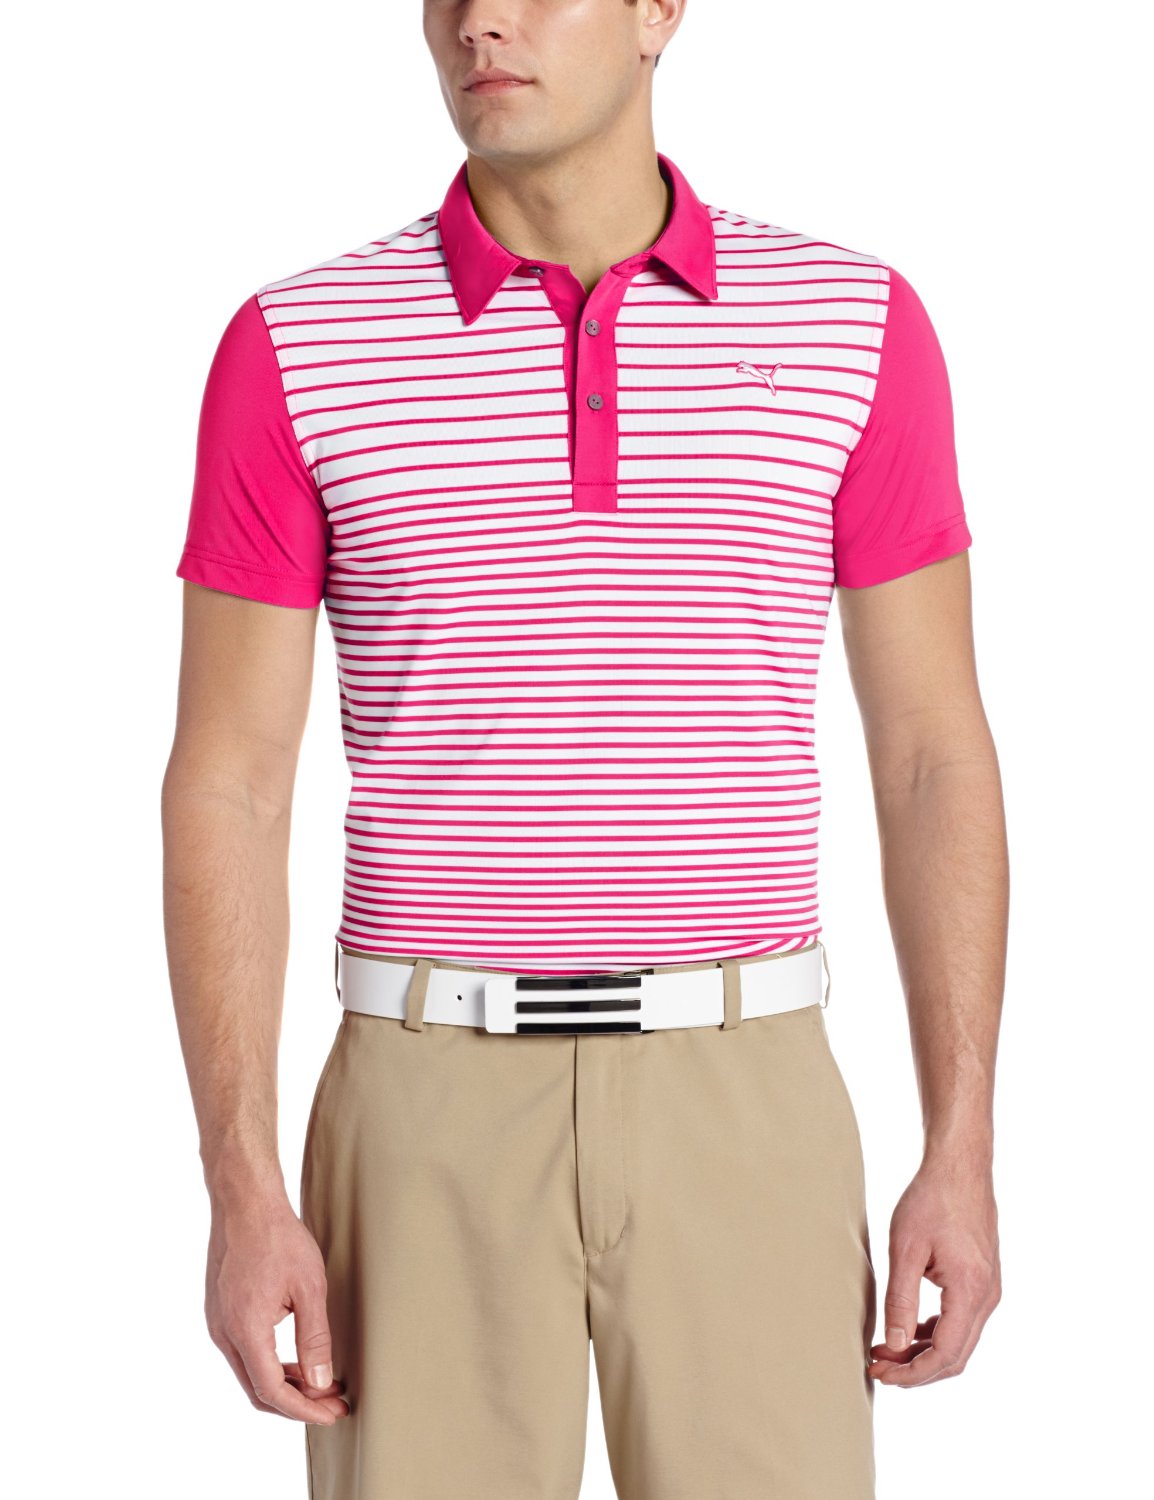 mens pink golf shirts